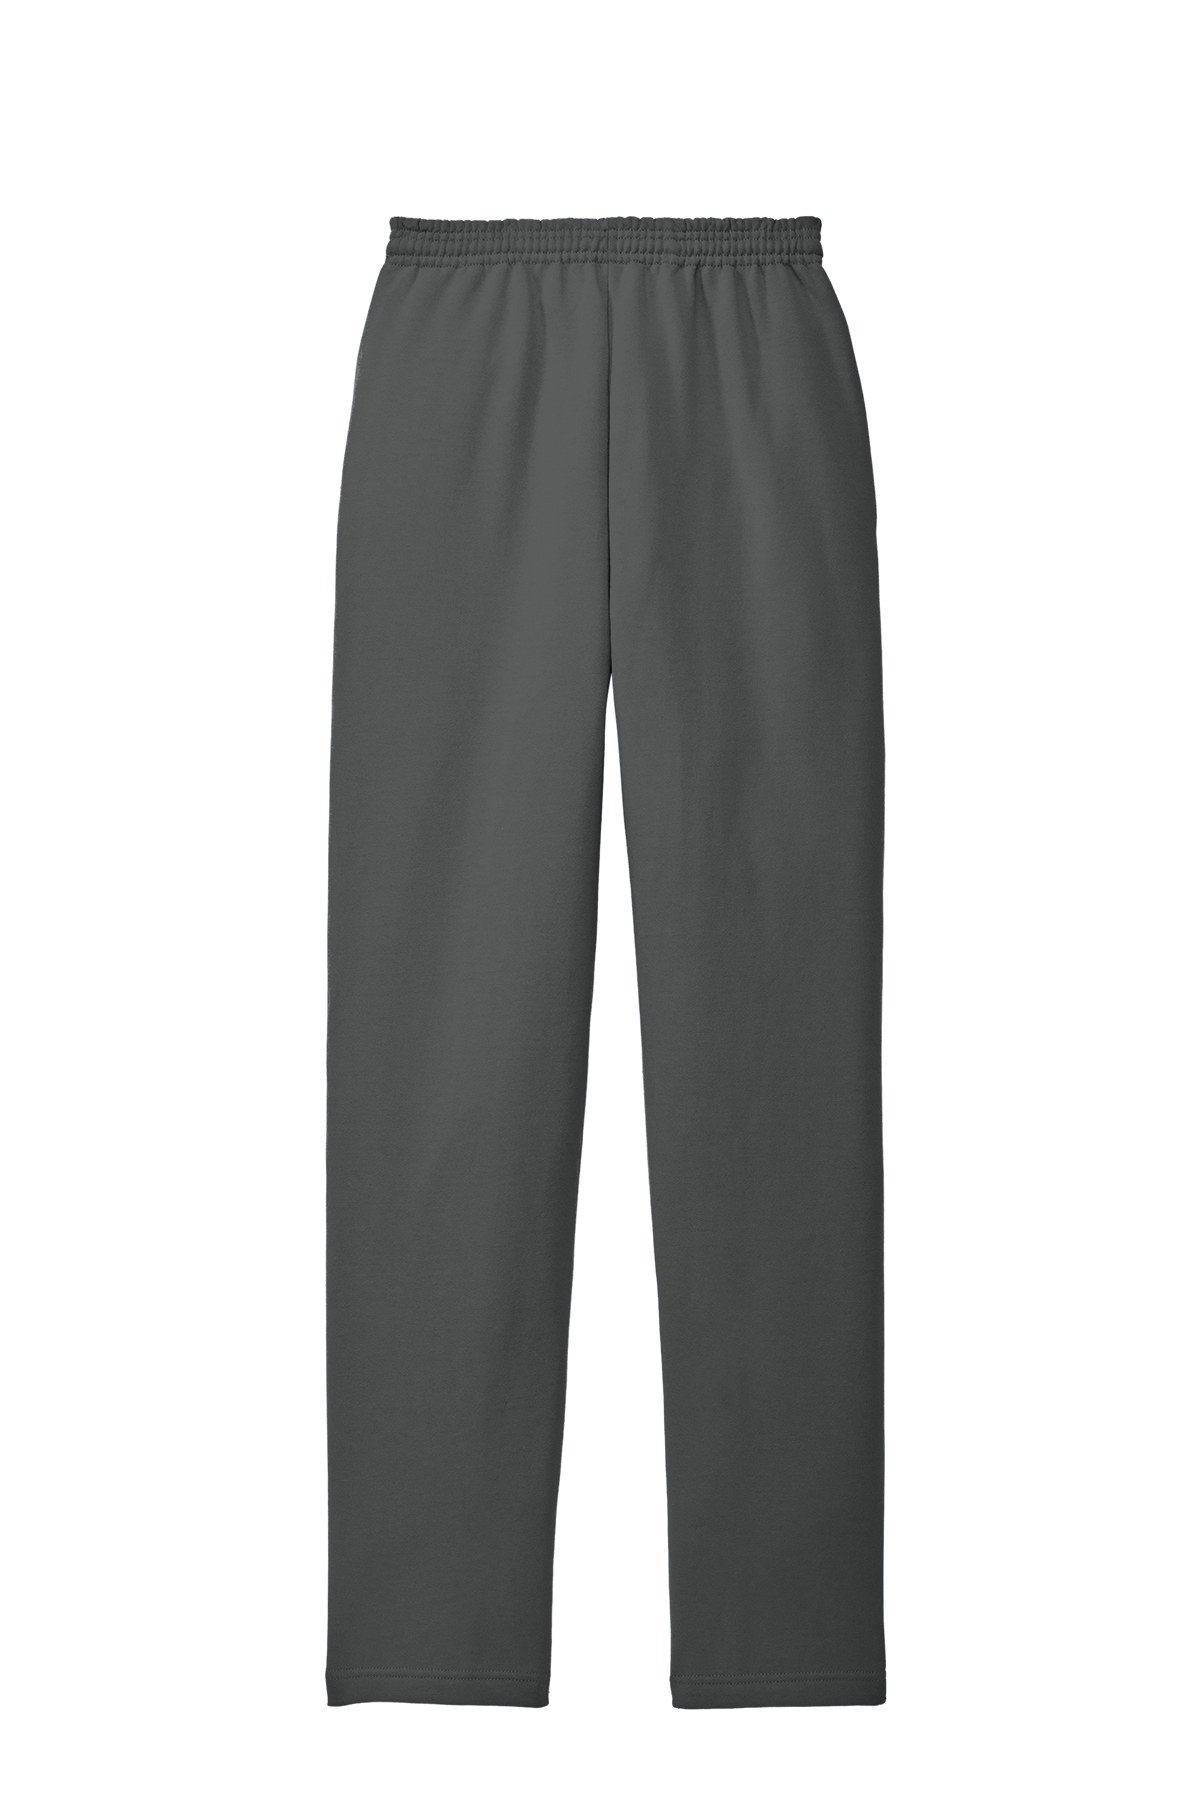 Port & Company Core Fleece Sweatpant with Pockets | Product | Port ...